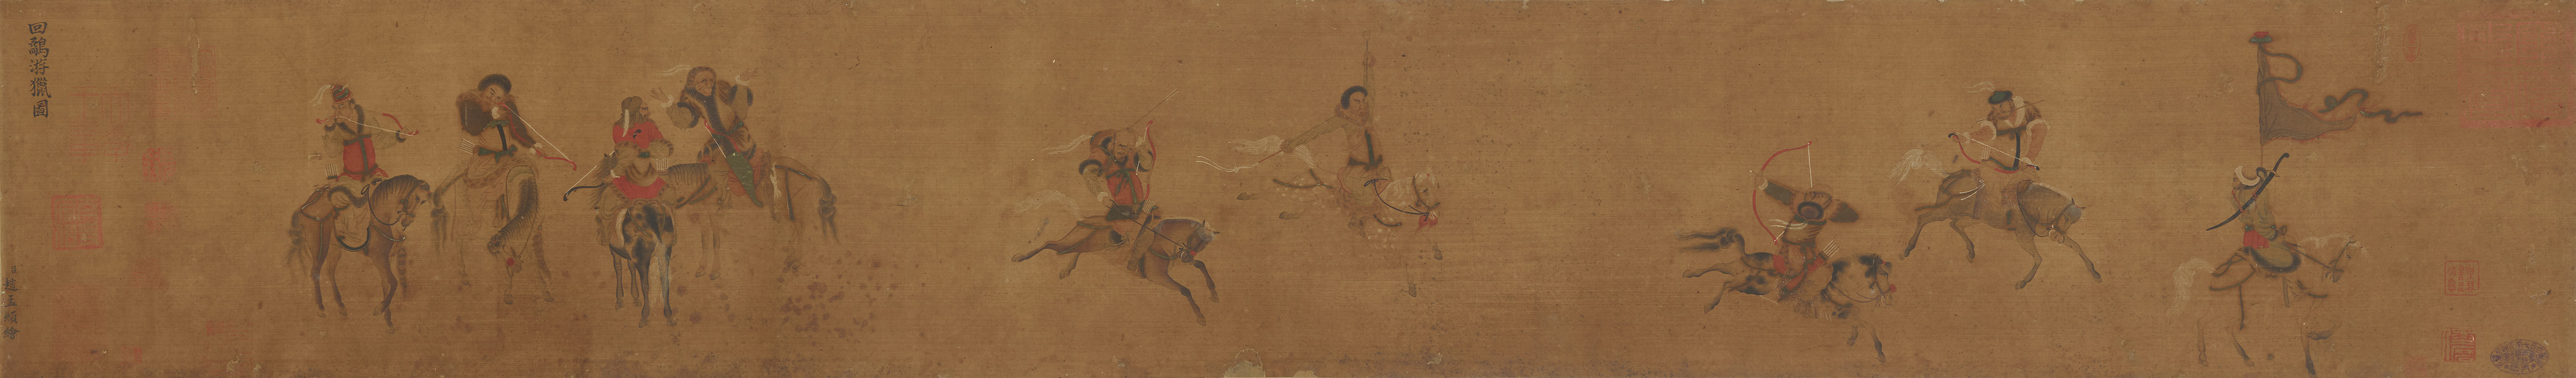 Nach Zhao Mengfu . Qing-Zeit - Uiguren bei einer Jagd (Huihu youlie tu). - image-2